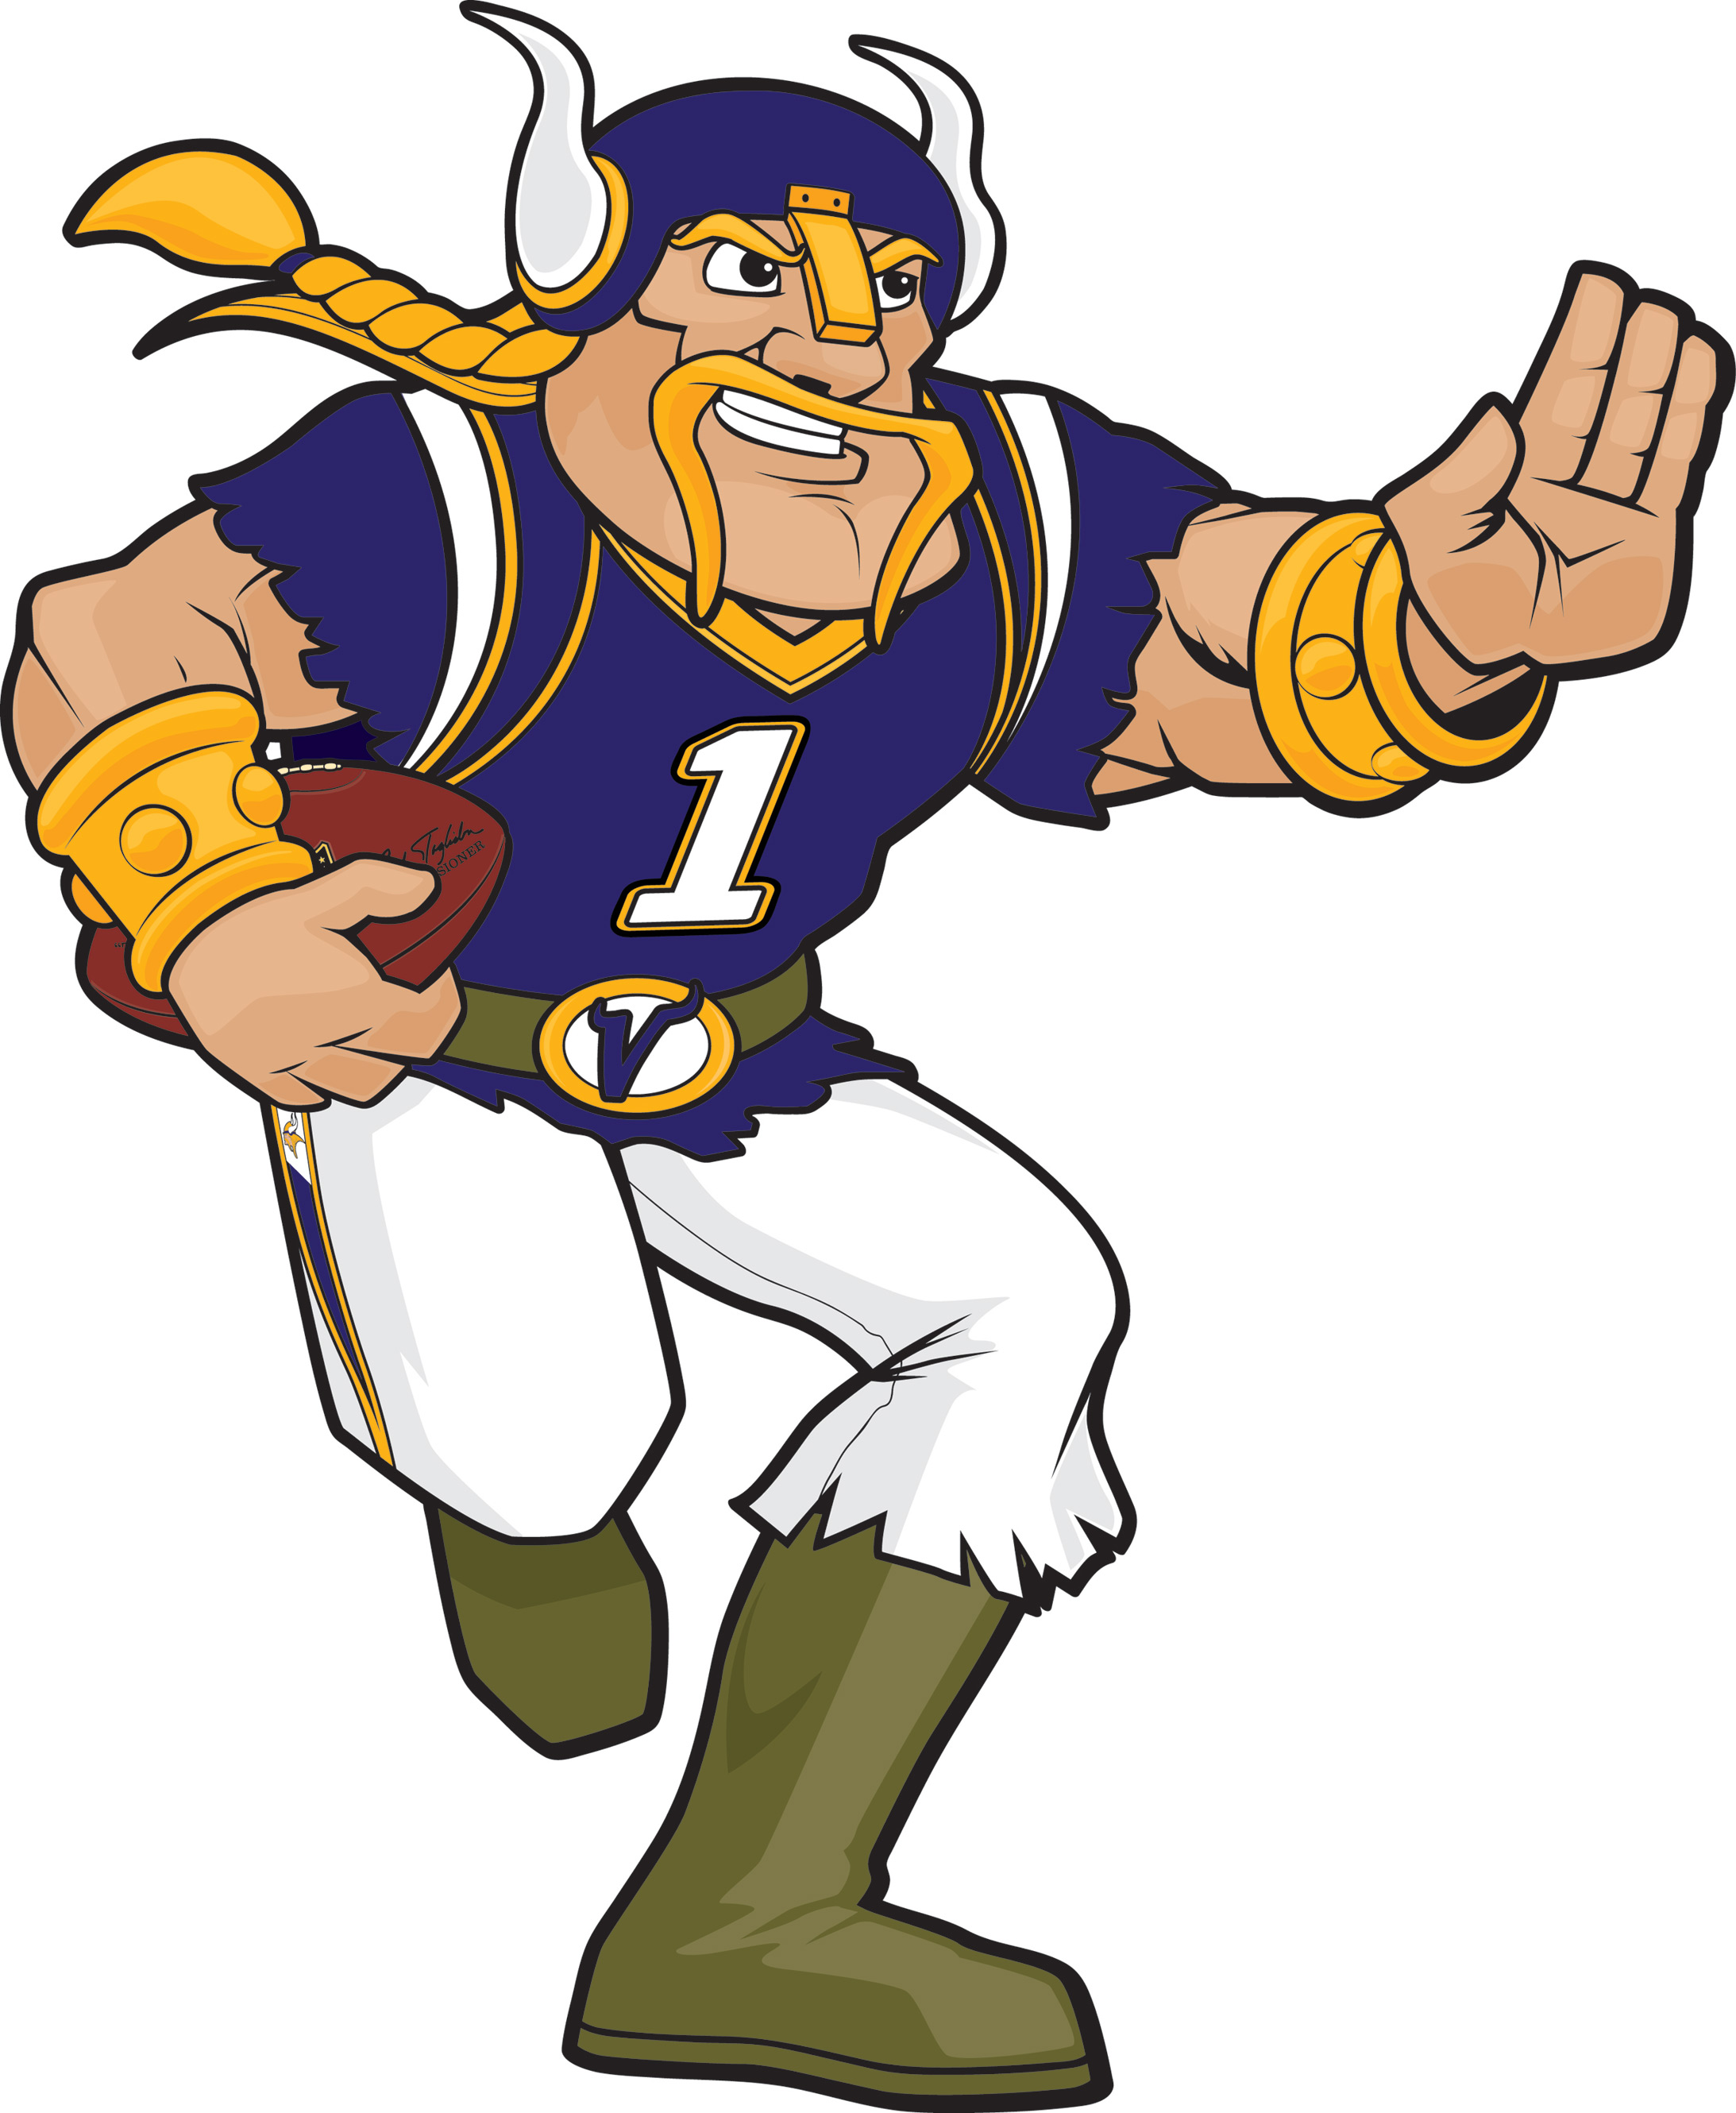 Viktor the Viking Invades NFL: Minnesota Vikings Draft Kids' Marketing